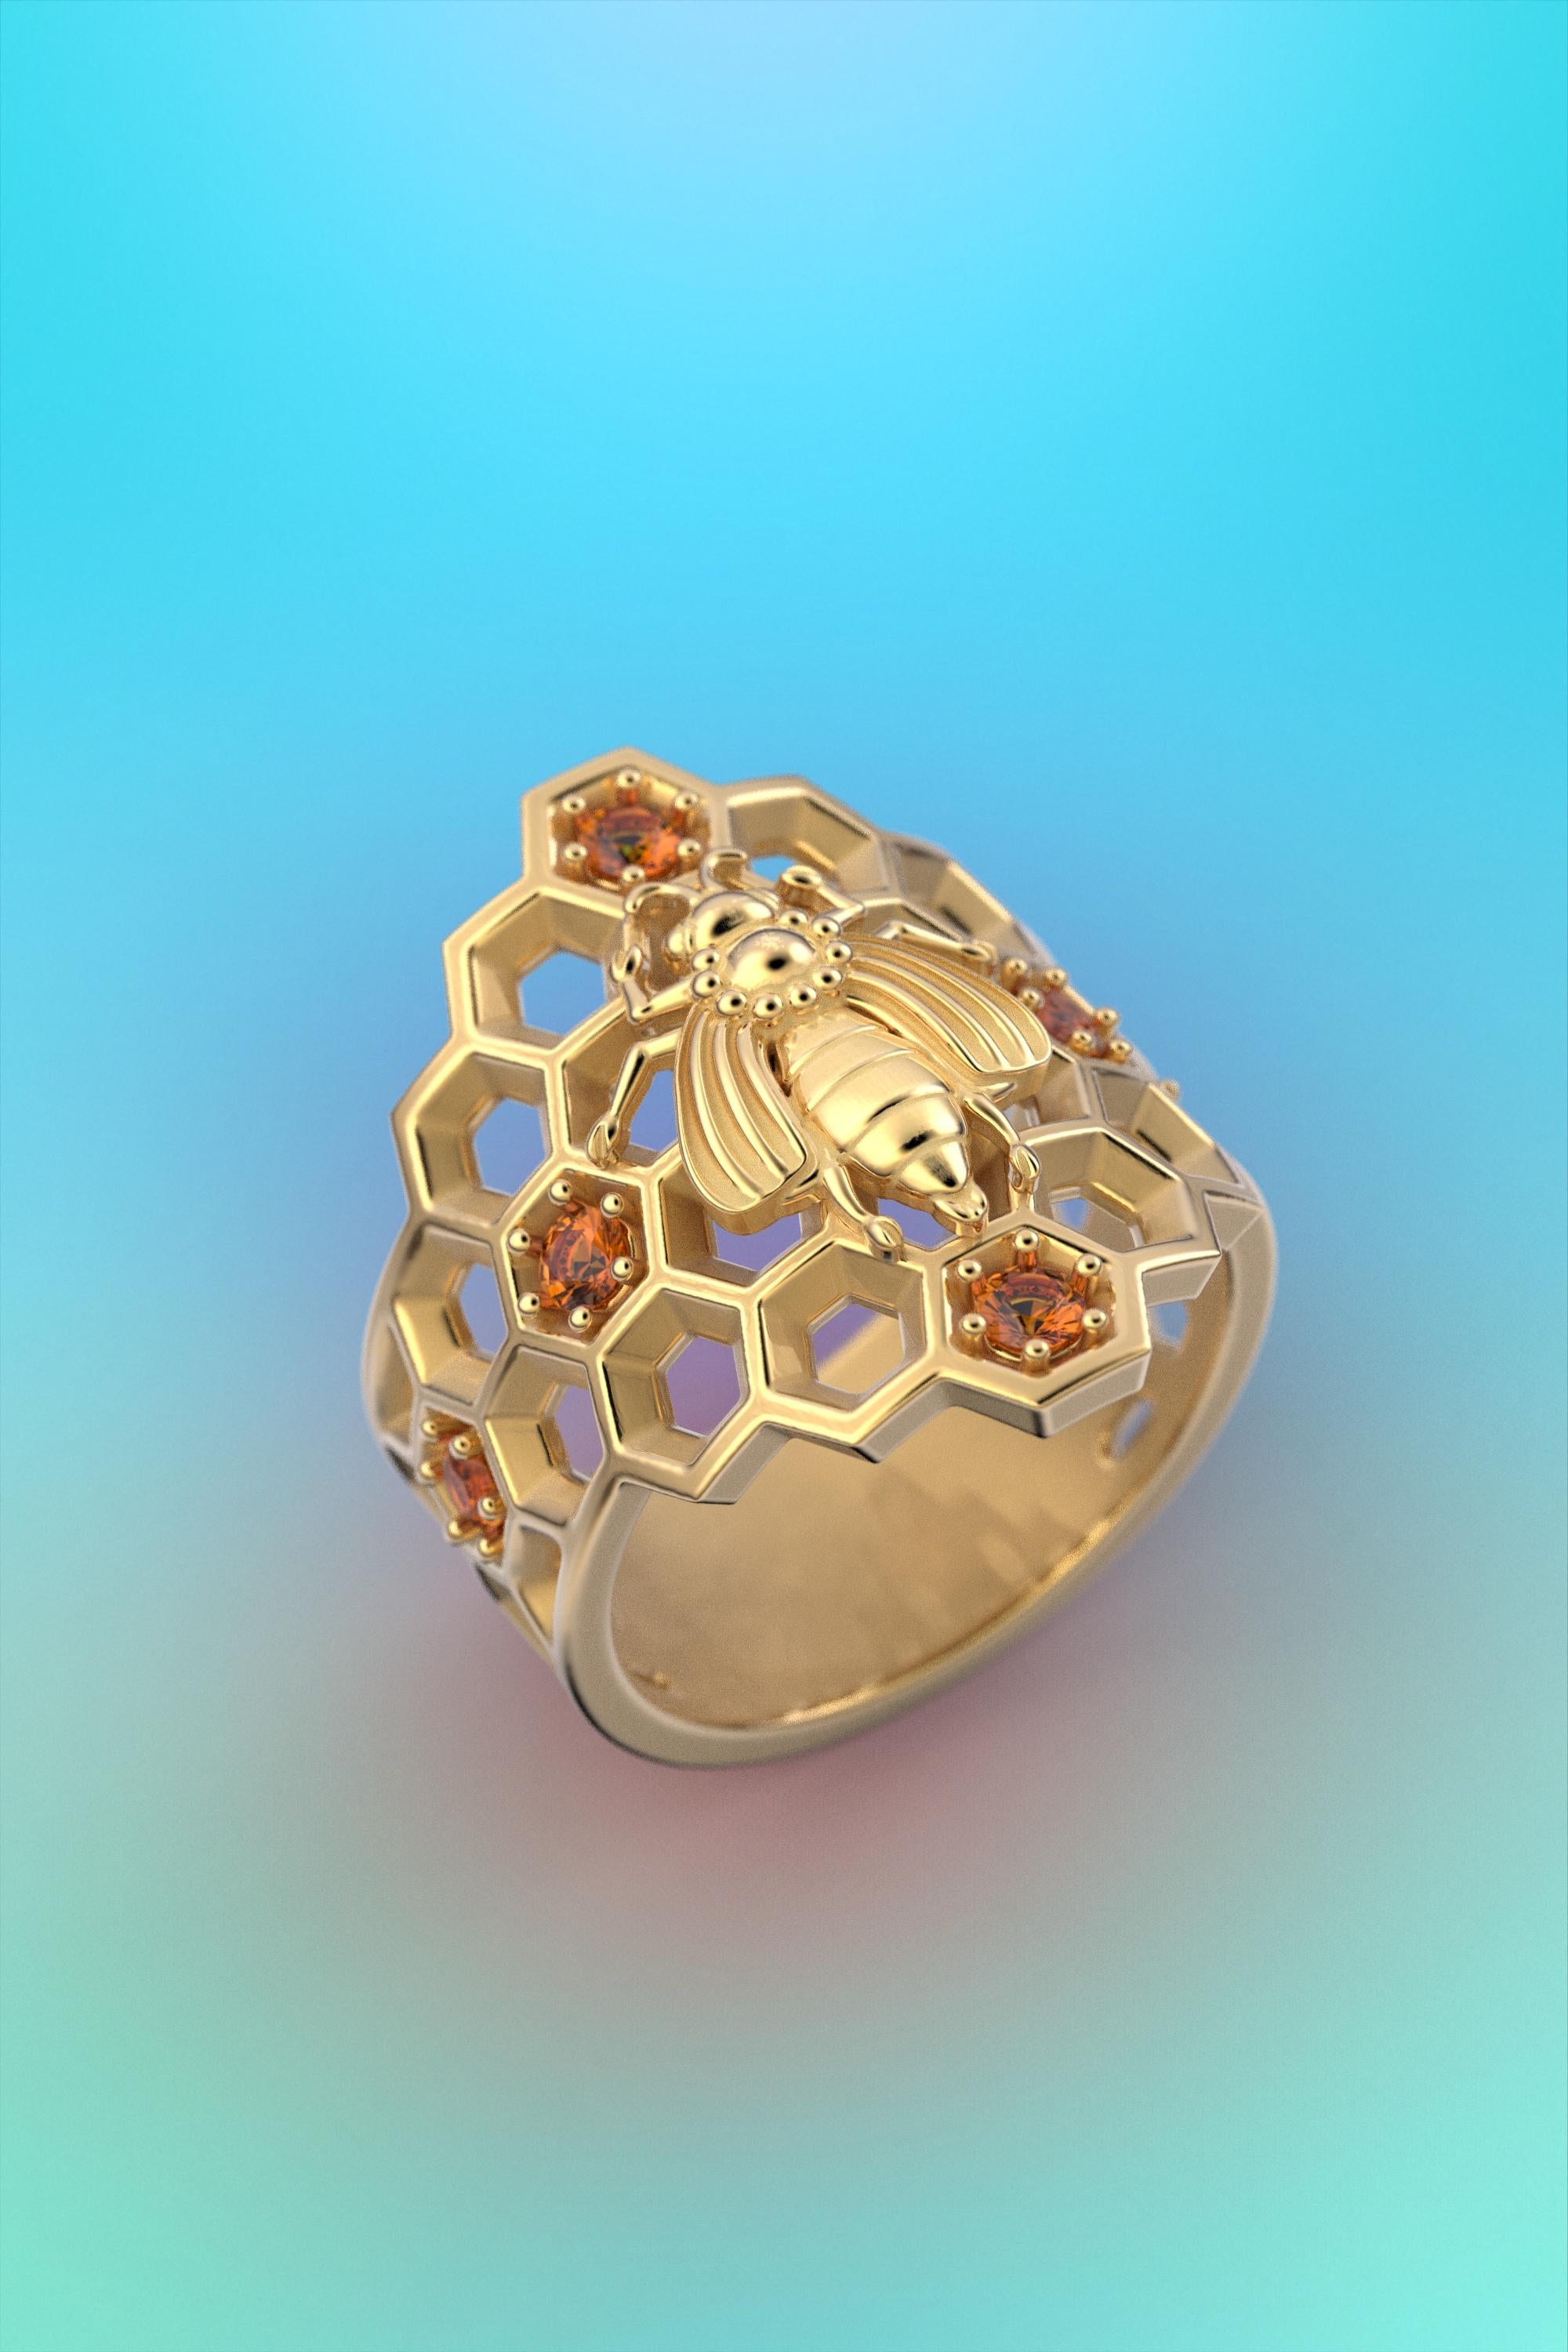 For Sale:   Honeycomb Bee Ring in 14k Solid Gold with natural Orange Spessartite Garnet 7